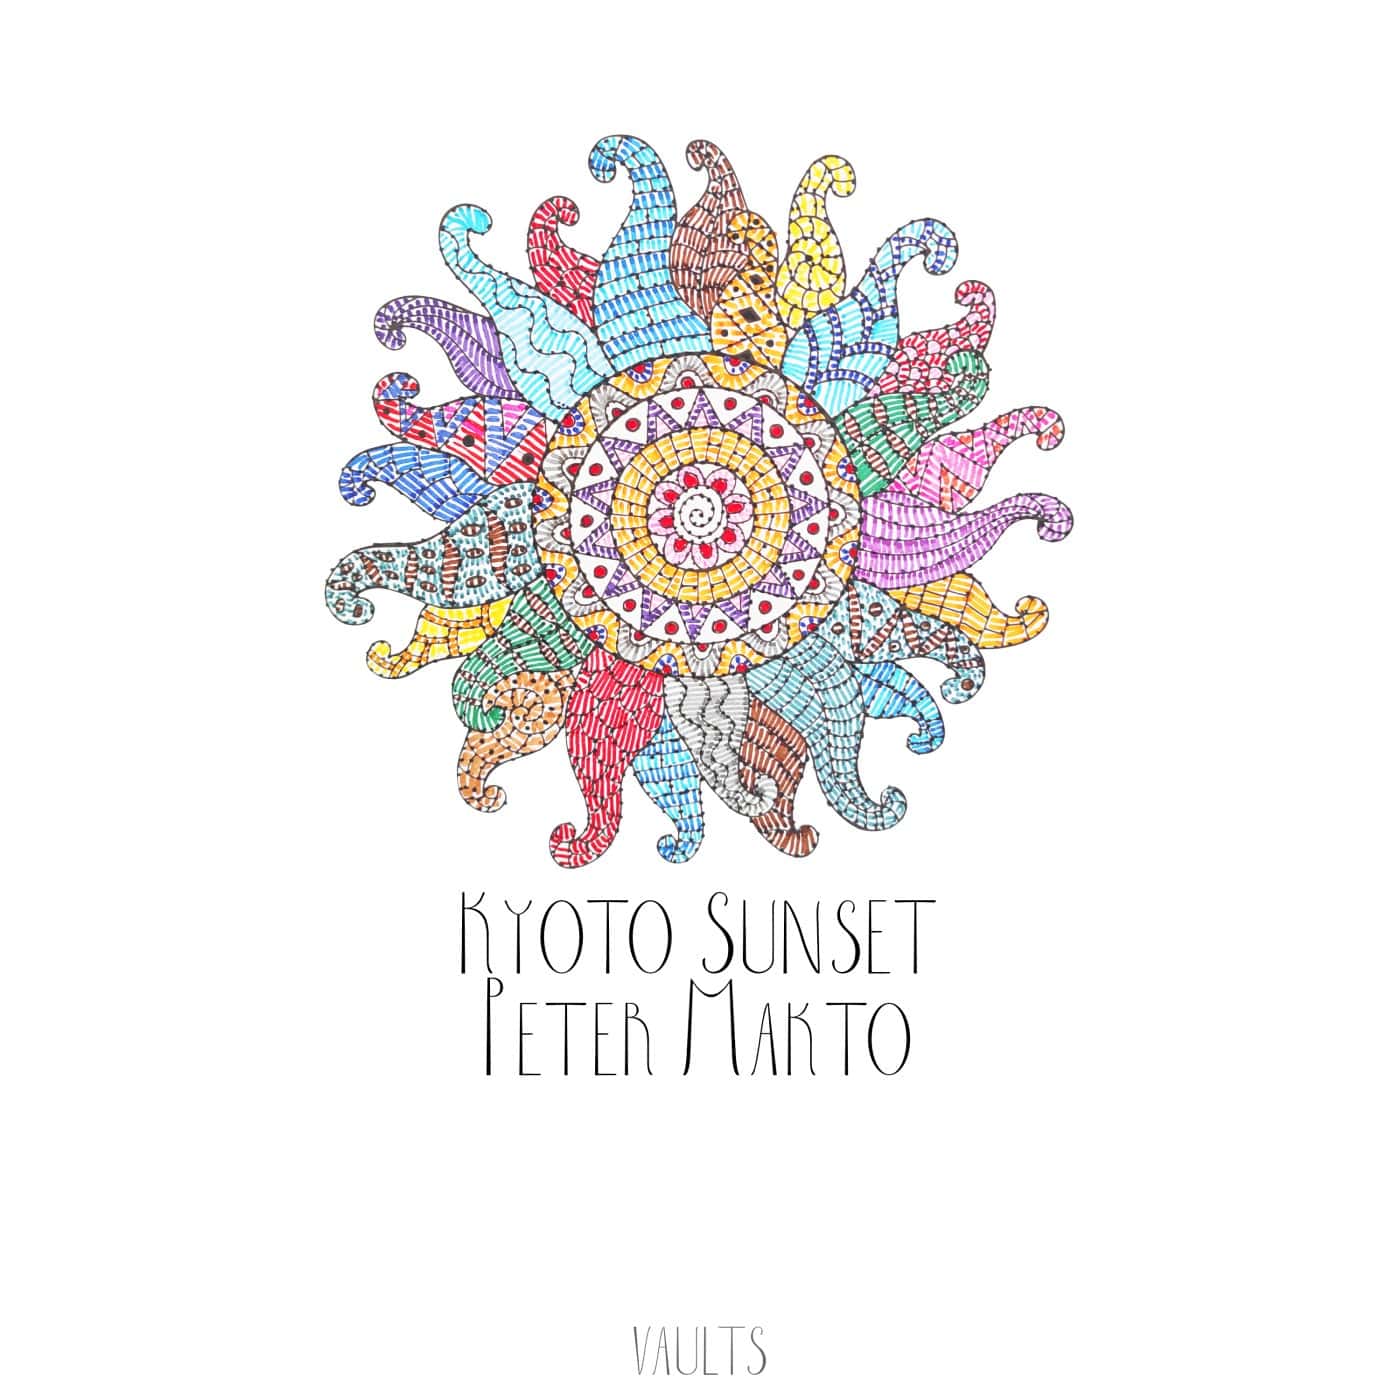 Download Peter Makto - Kyoto Sunset on Electrobuzz